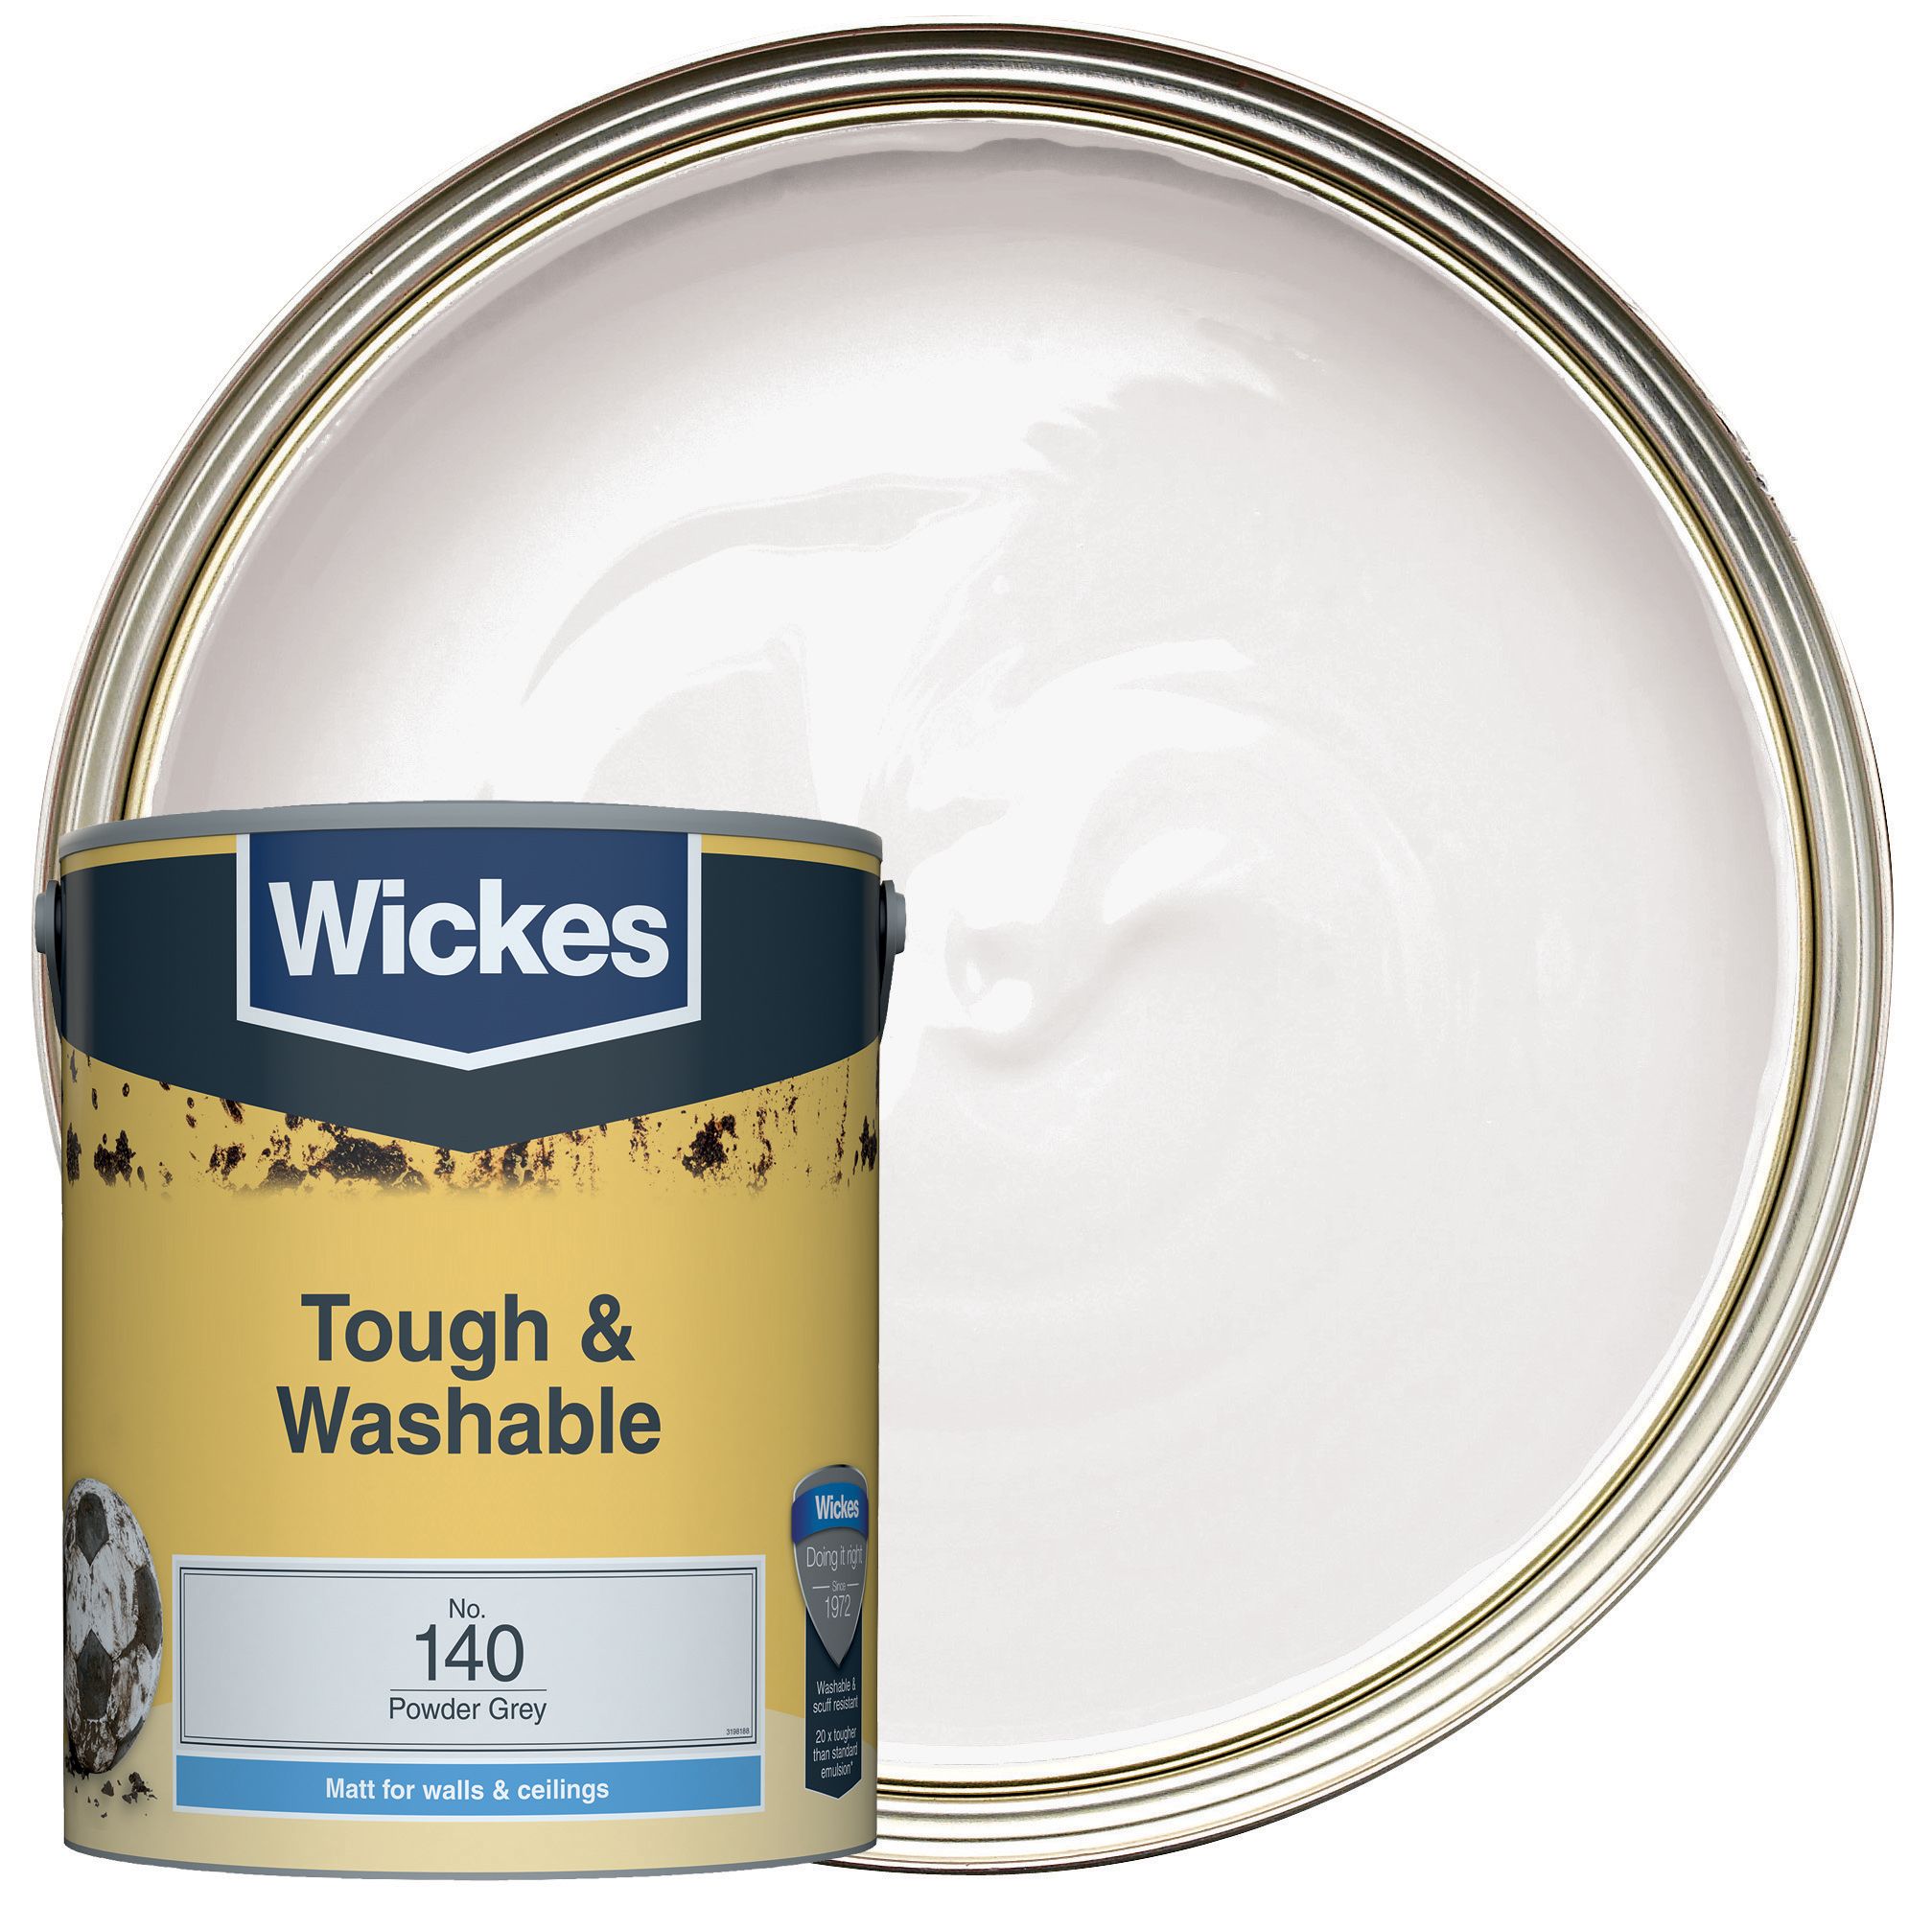 Wickes Tough & Washable Matt Emulsion Paint - Powder Grey No.140 - 5L